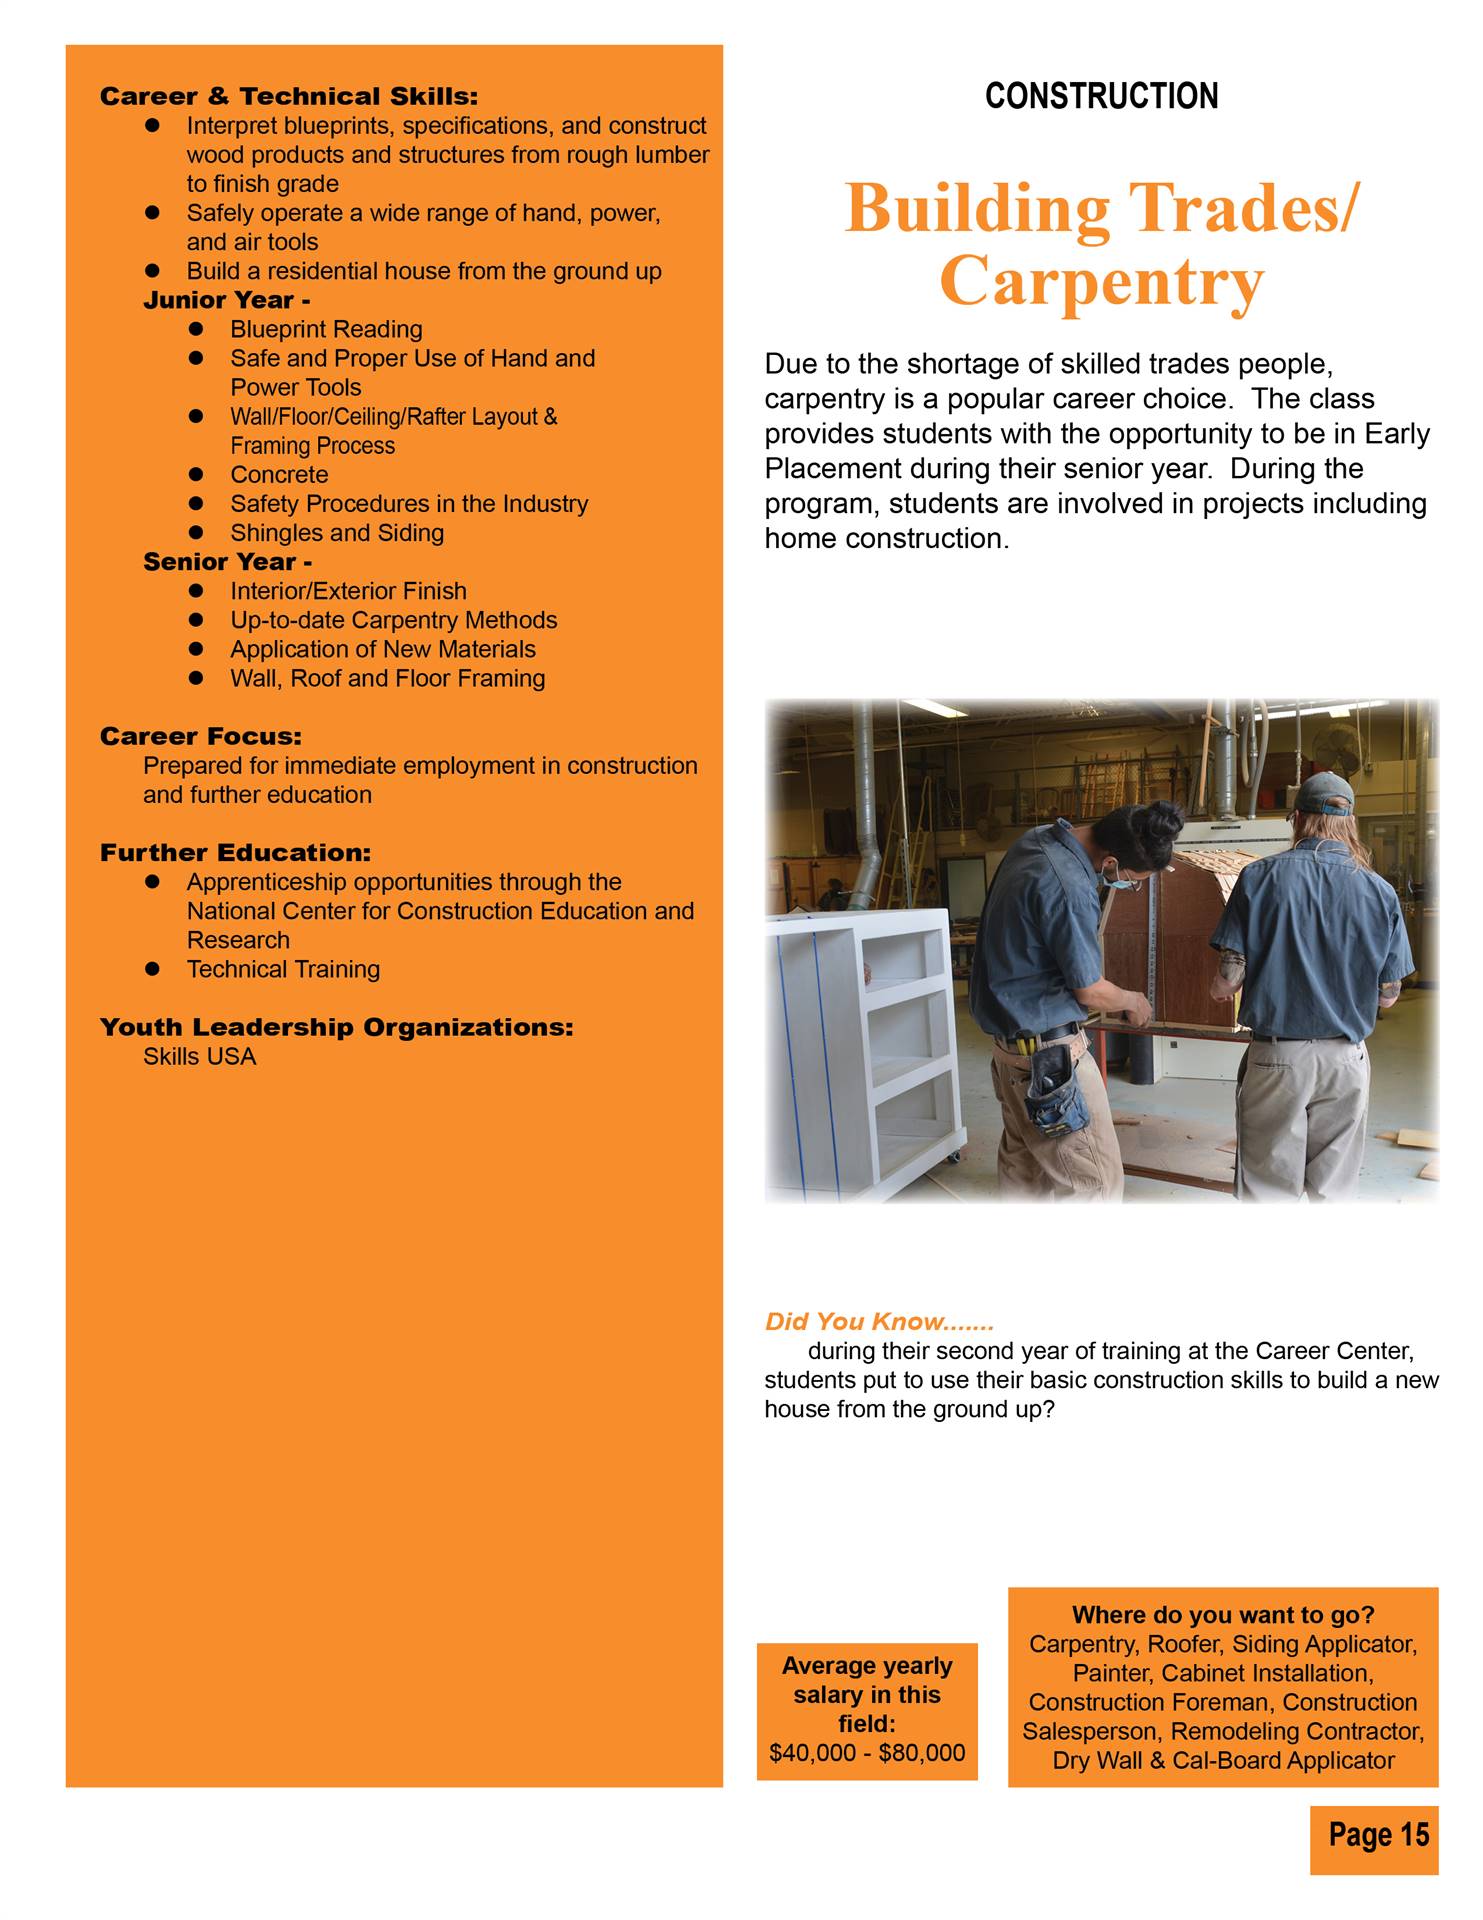 Building Trades/Carpentry